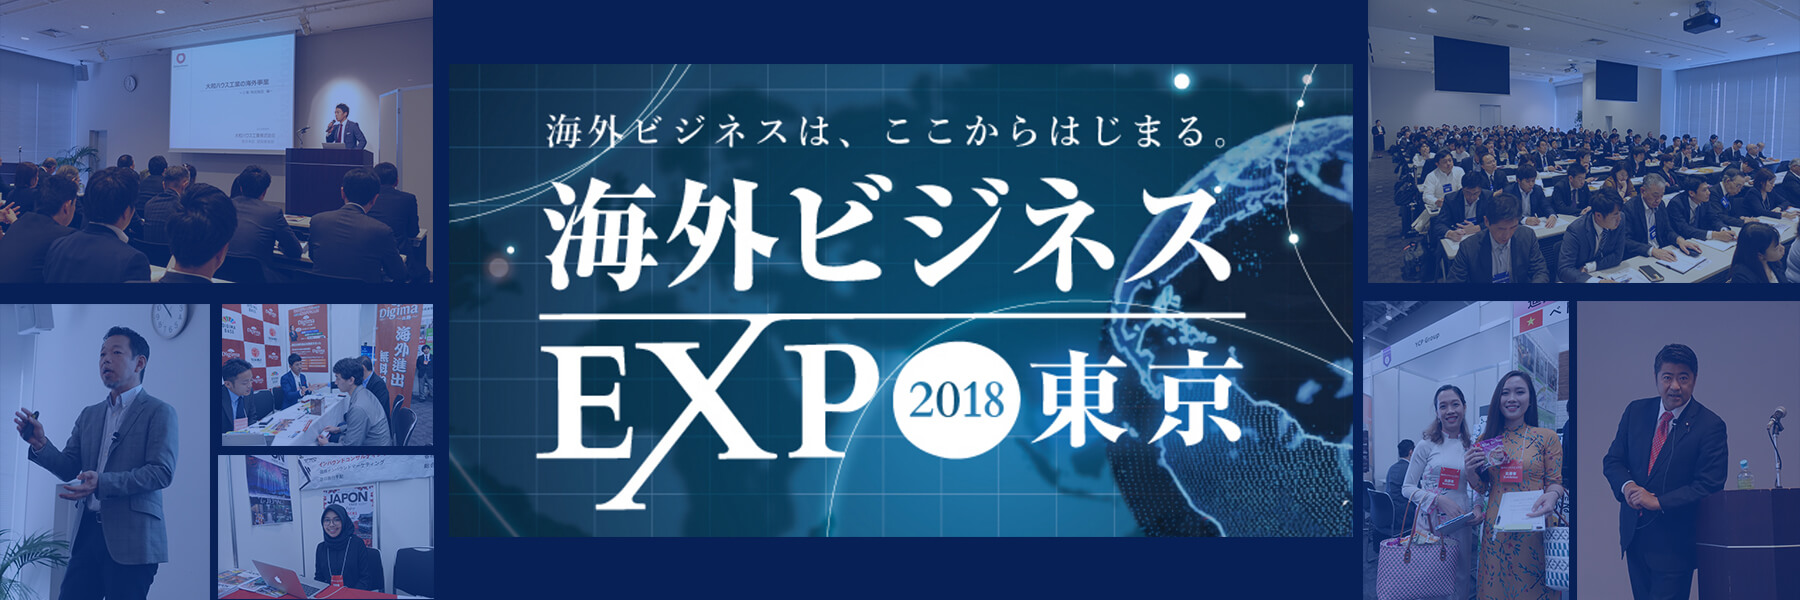 EXPO2018_01